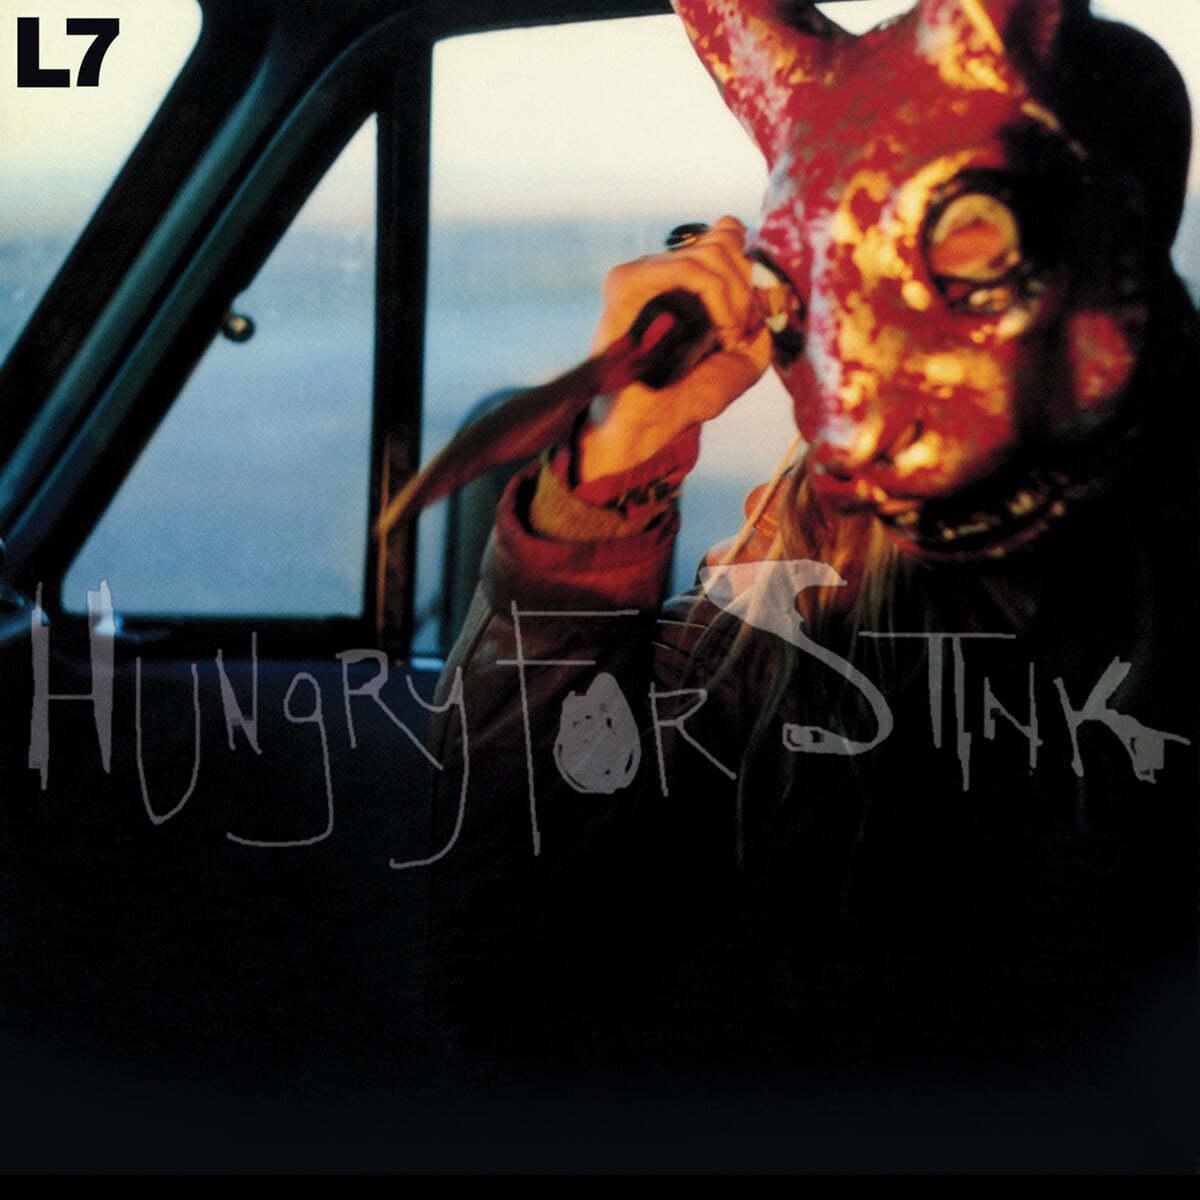 L7 (엘세븐) - Hungry for Stink [블러드 레드 컬러 LP]